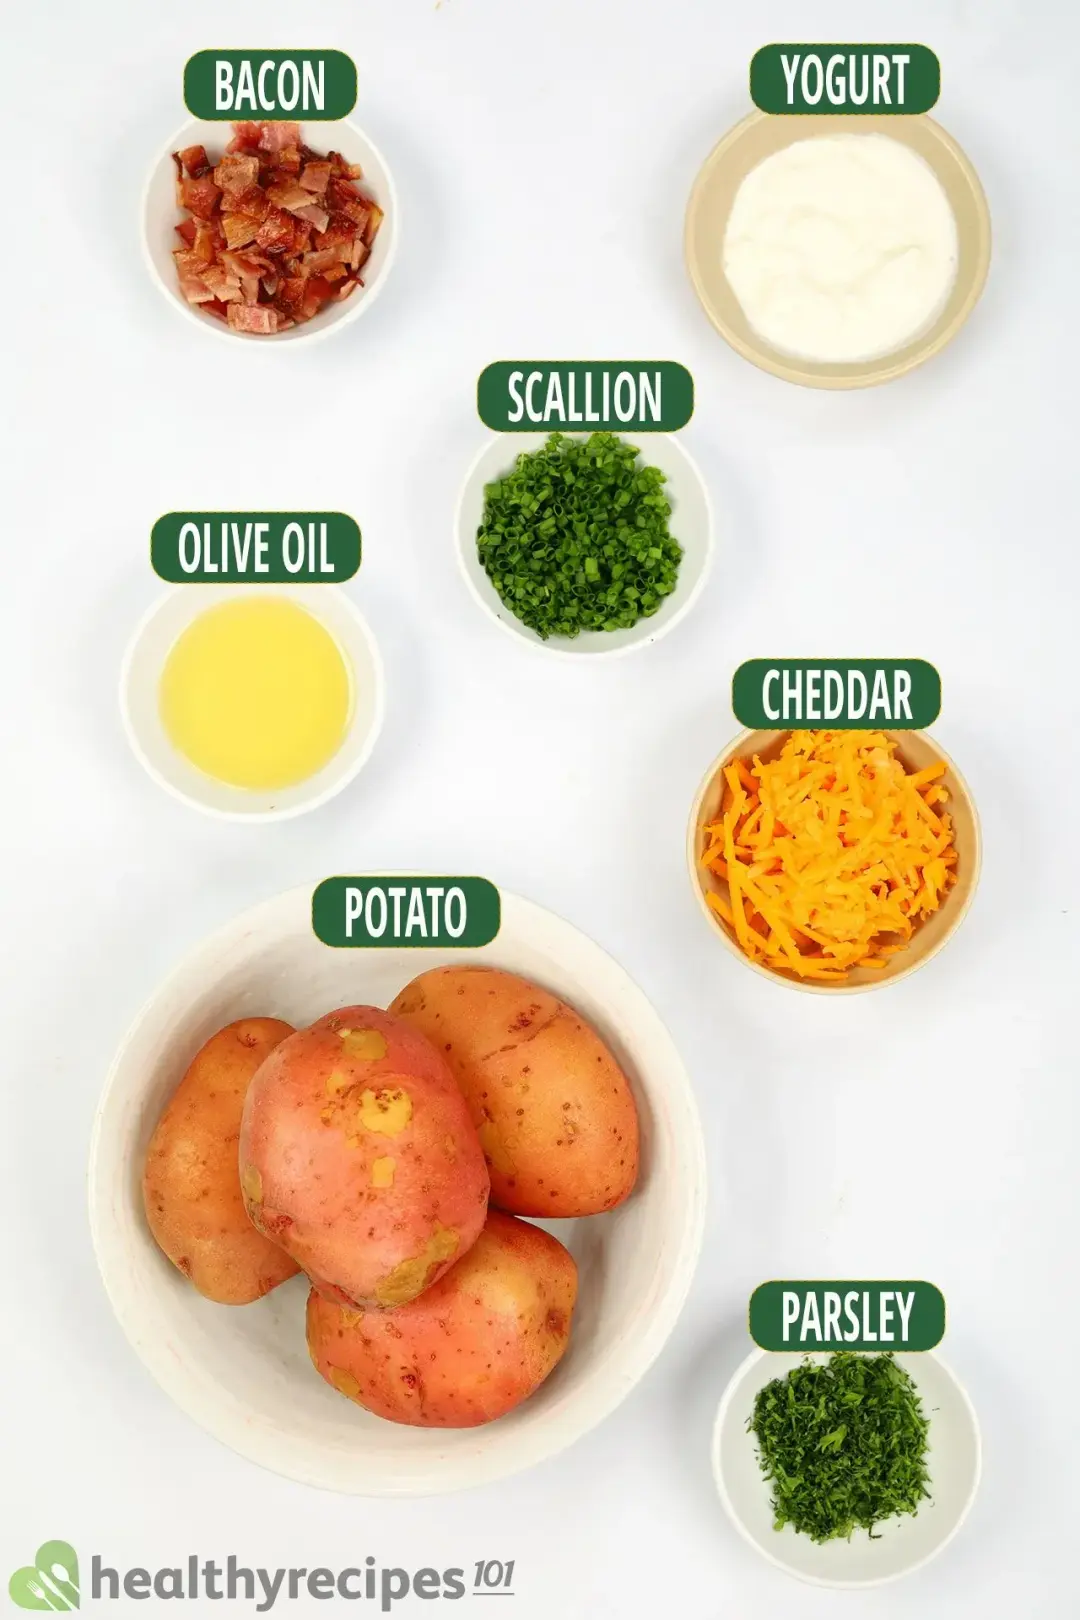 Ingredients for This Potato Skins Recipe